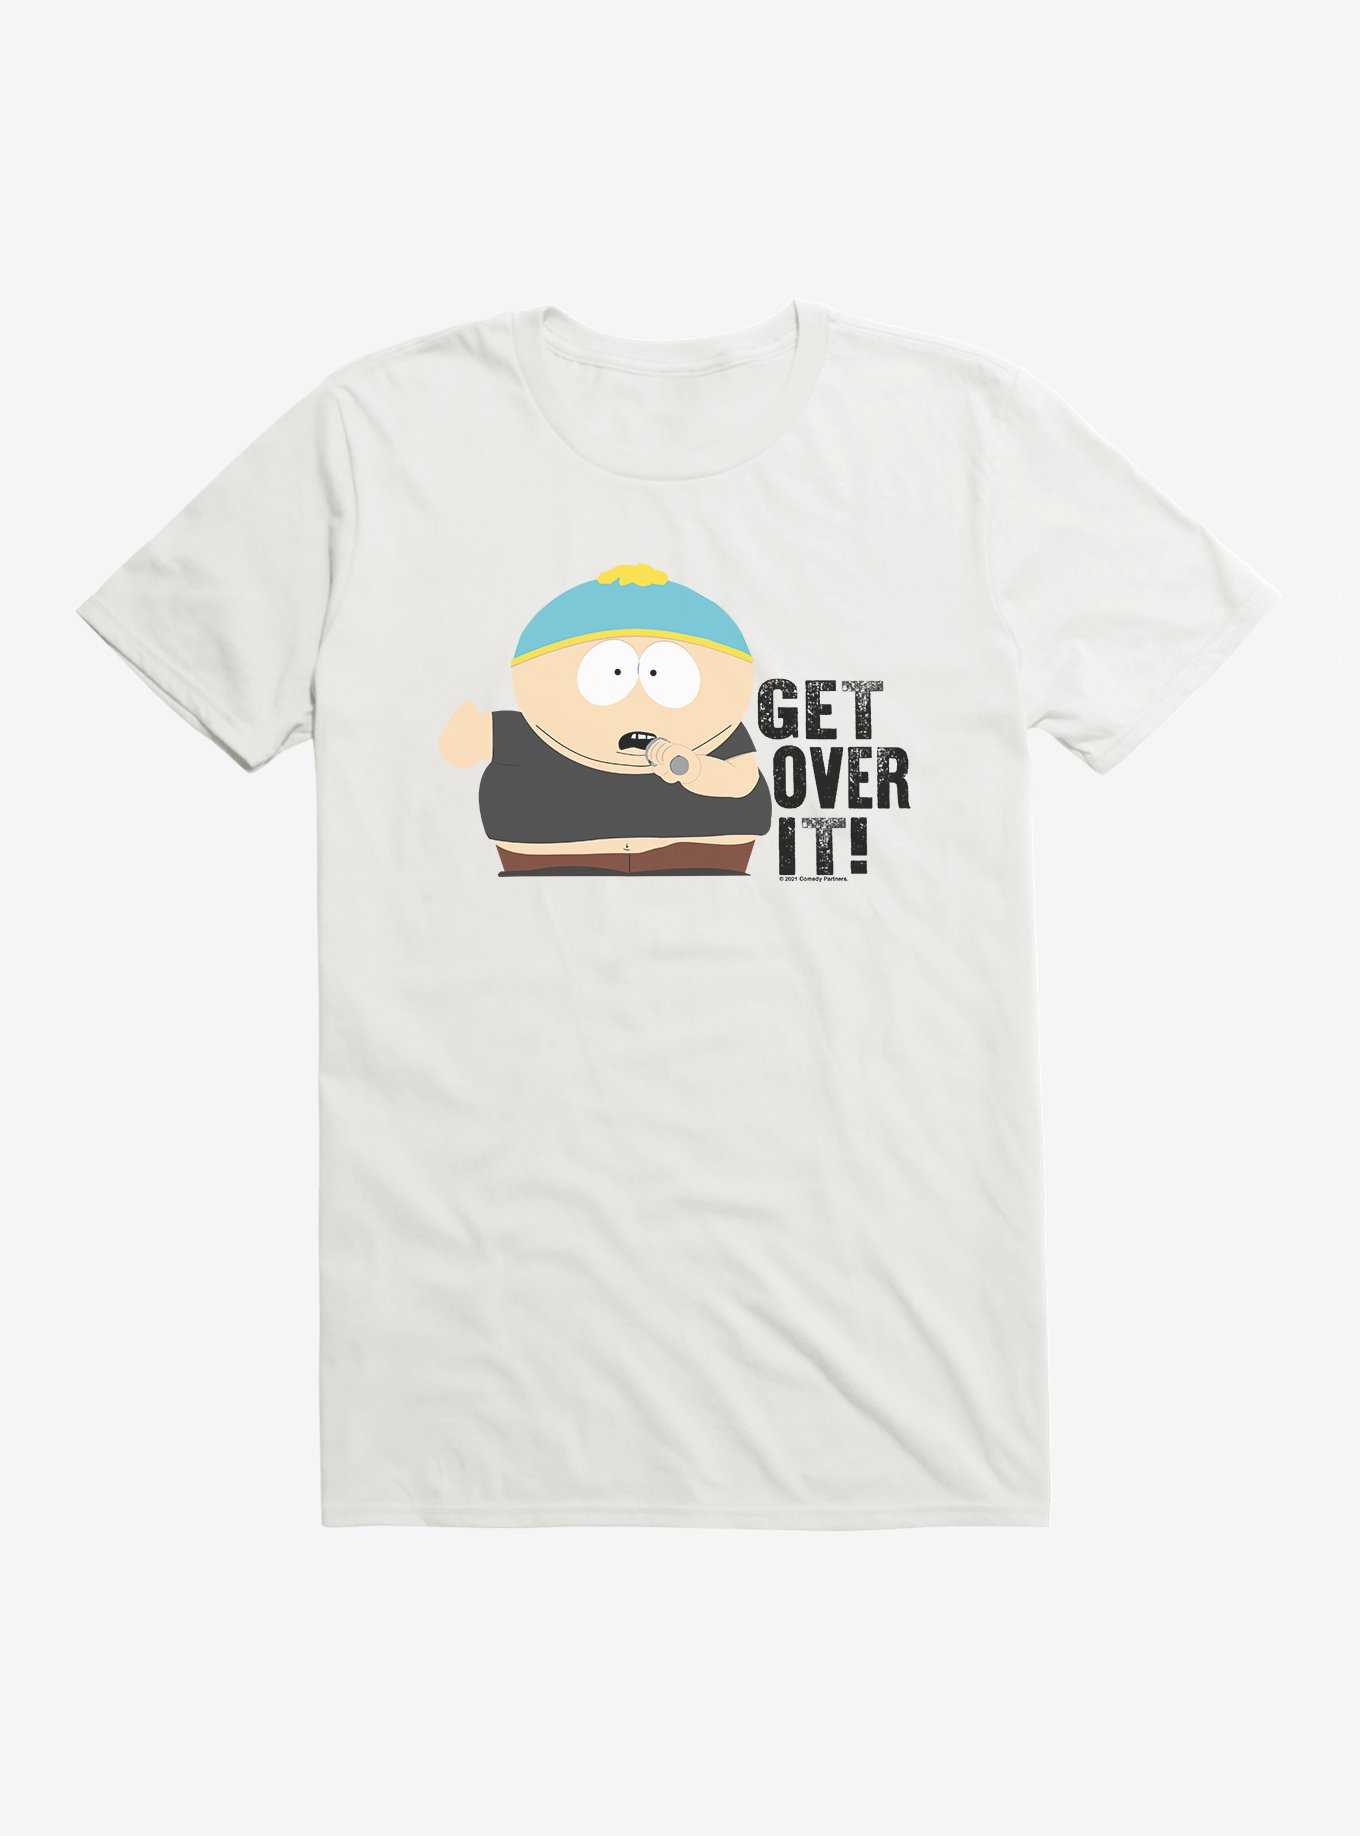 South Park Season Reference Cartman Over It T-Shirt, , hi-res